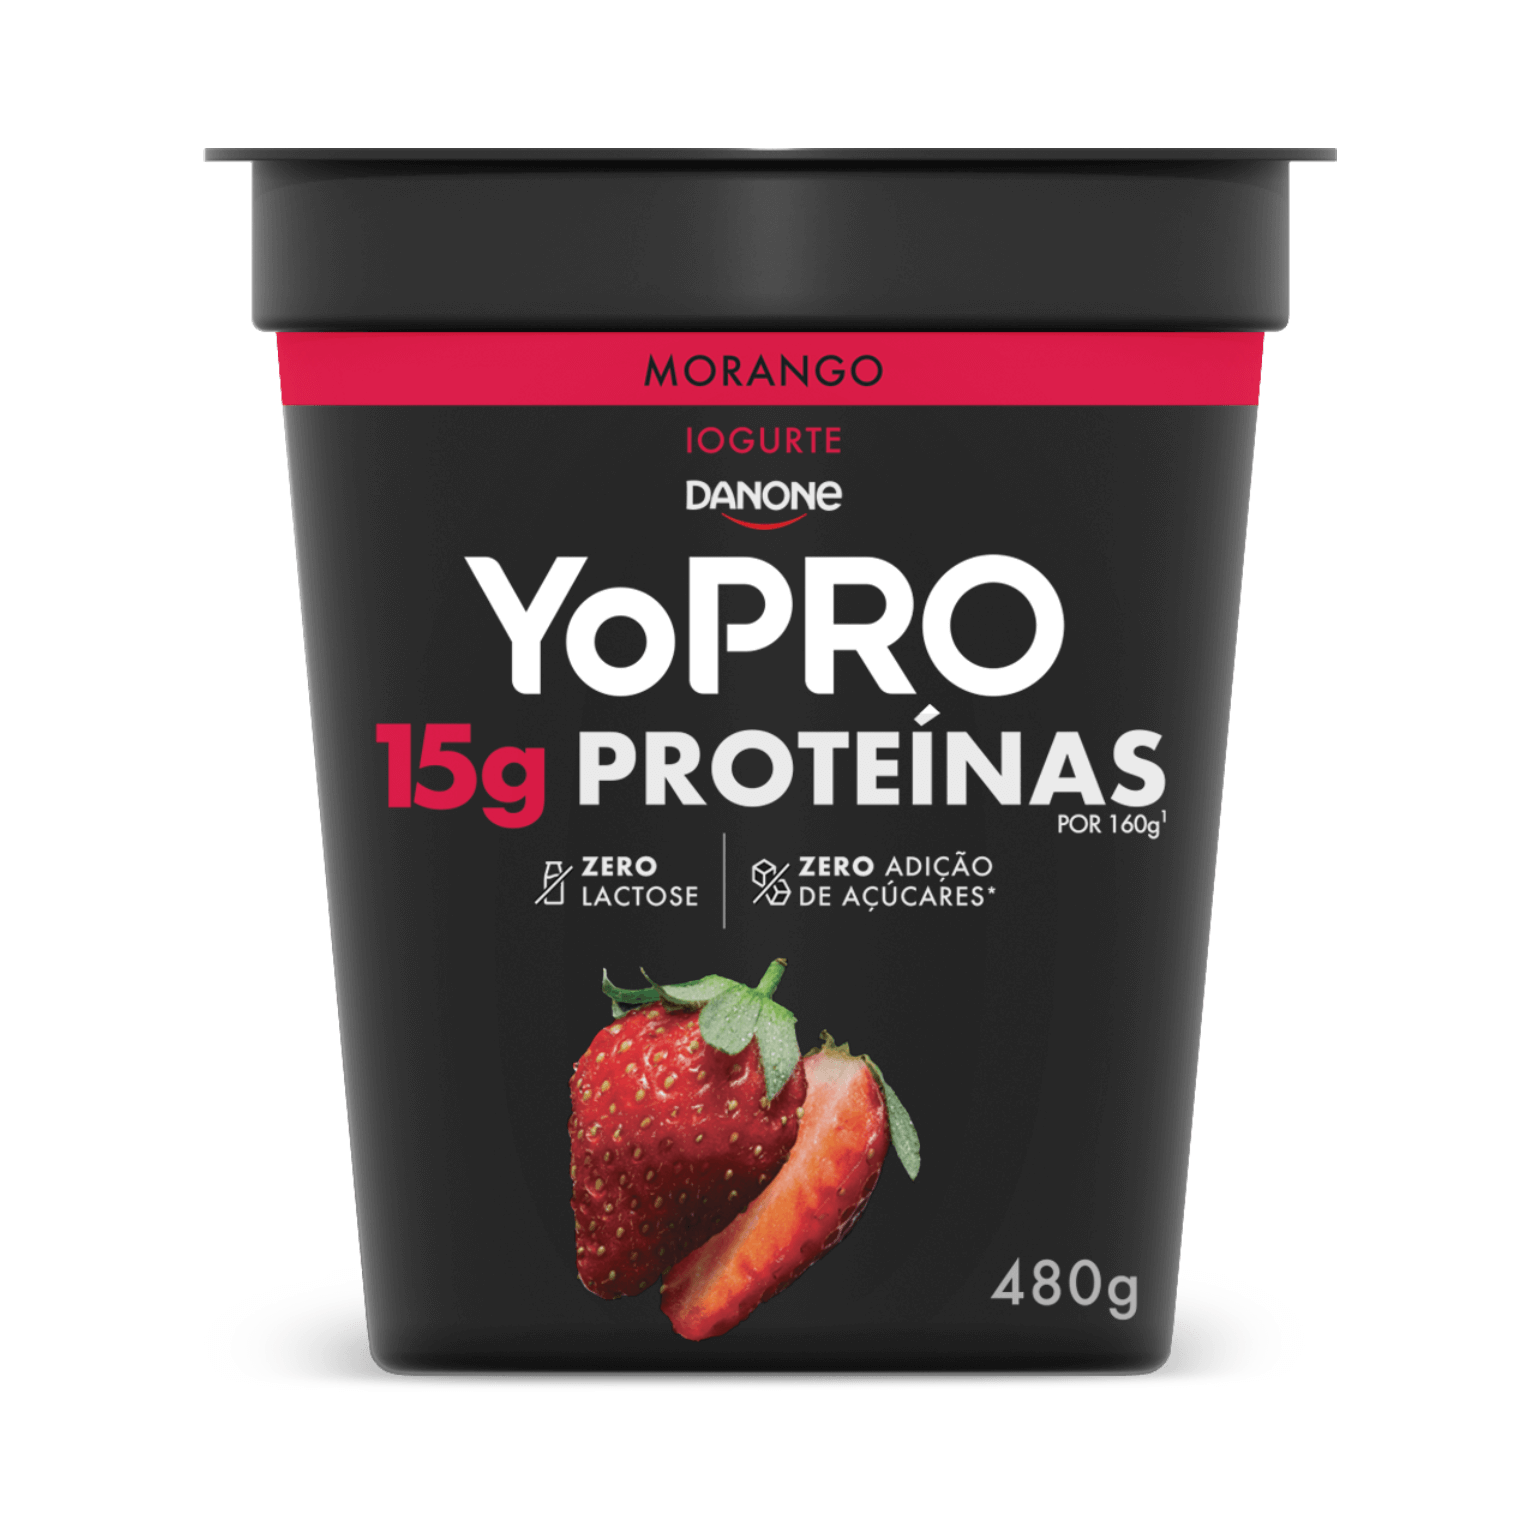 YoPRO pote colherável de 480g sabor morango